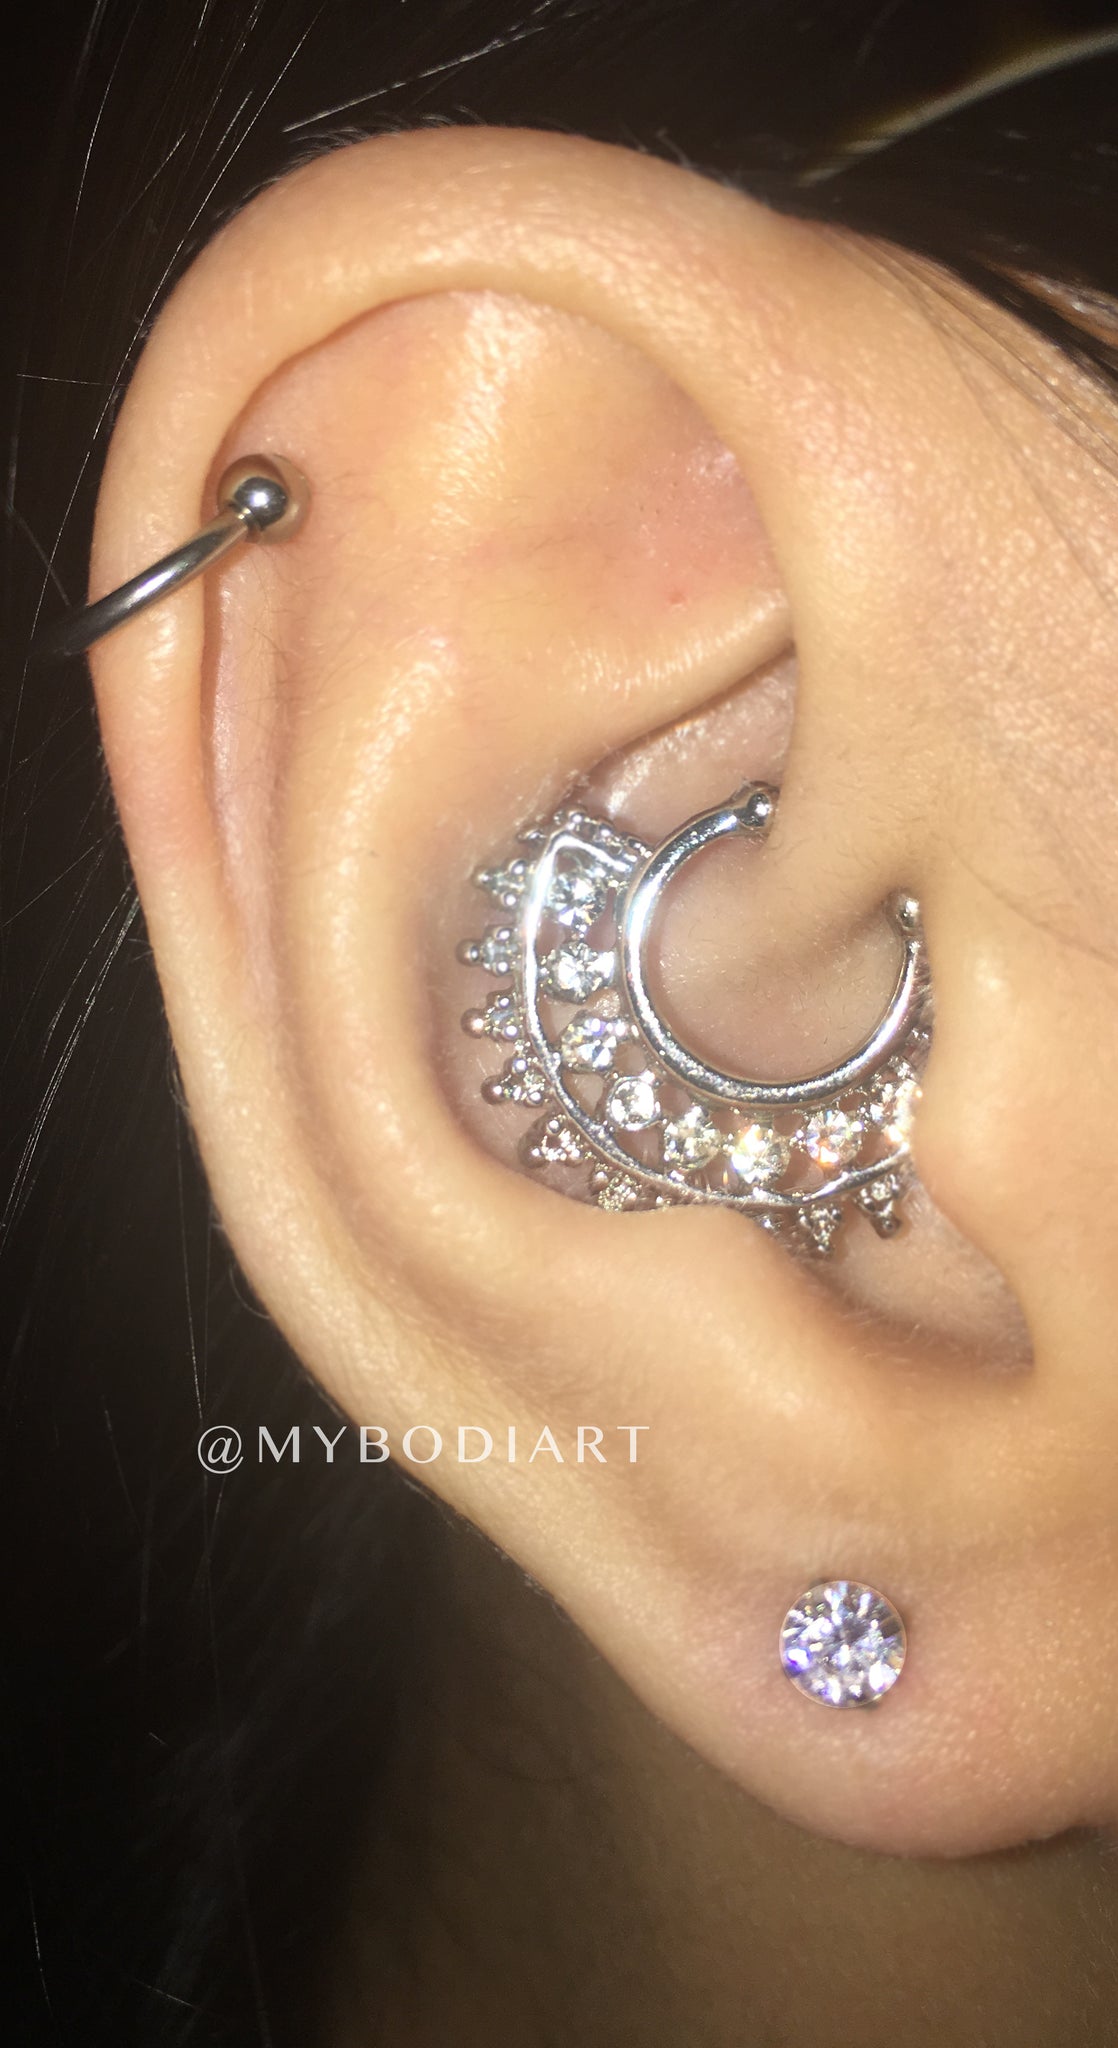 Arty Multiple Ear Piercing Ideas Placement - Cartilage Daith Ring Hoop - Ear Lobe Stud - www.MyBodiArt.com